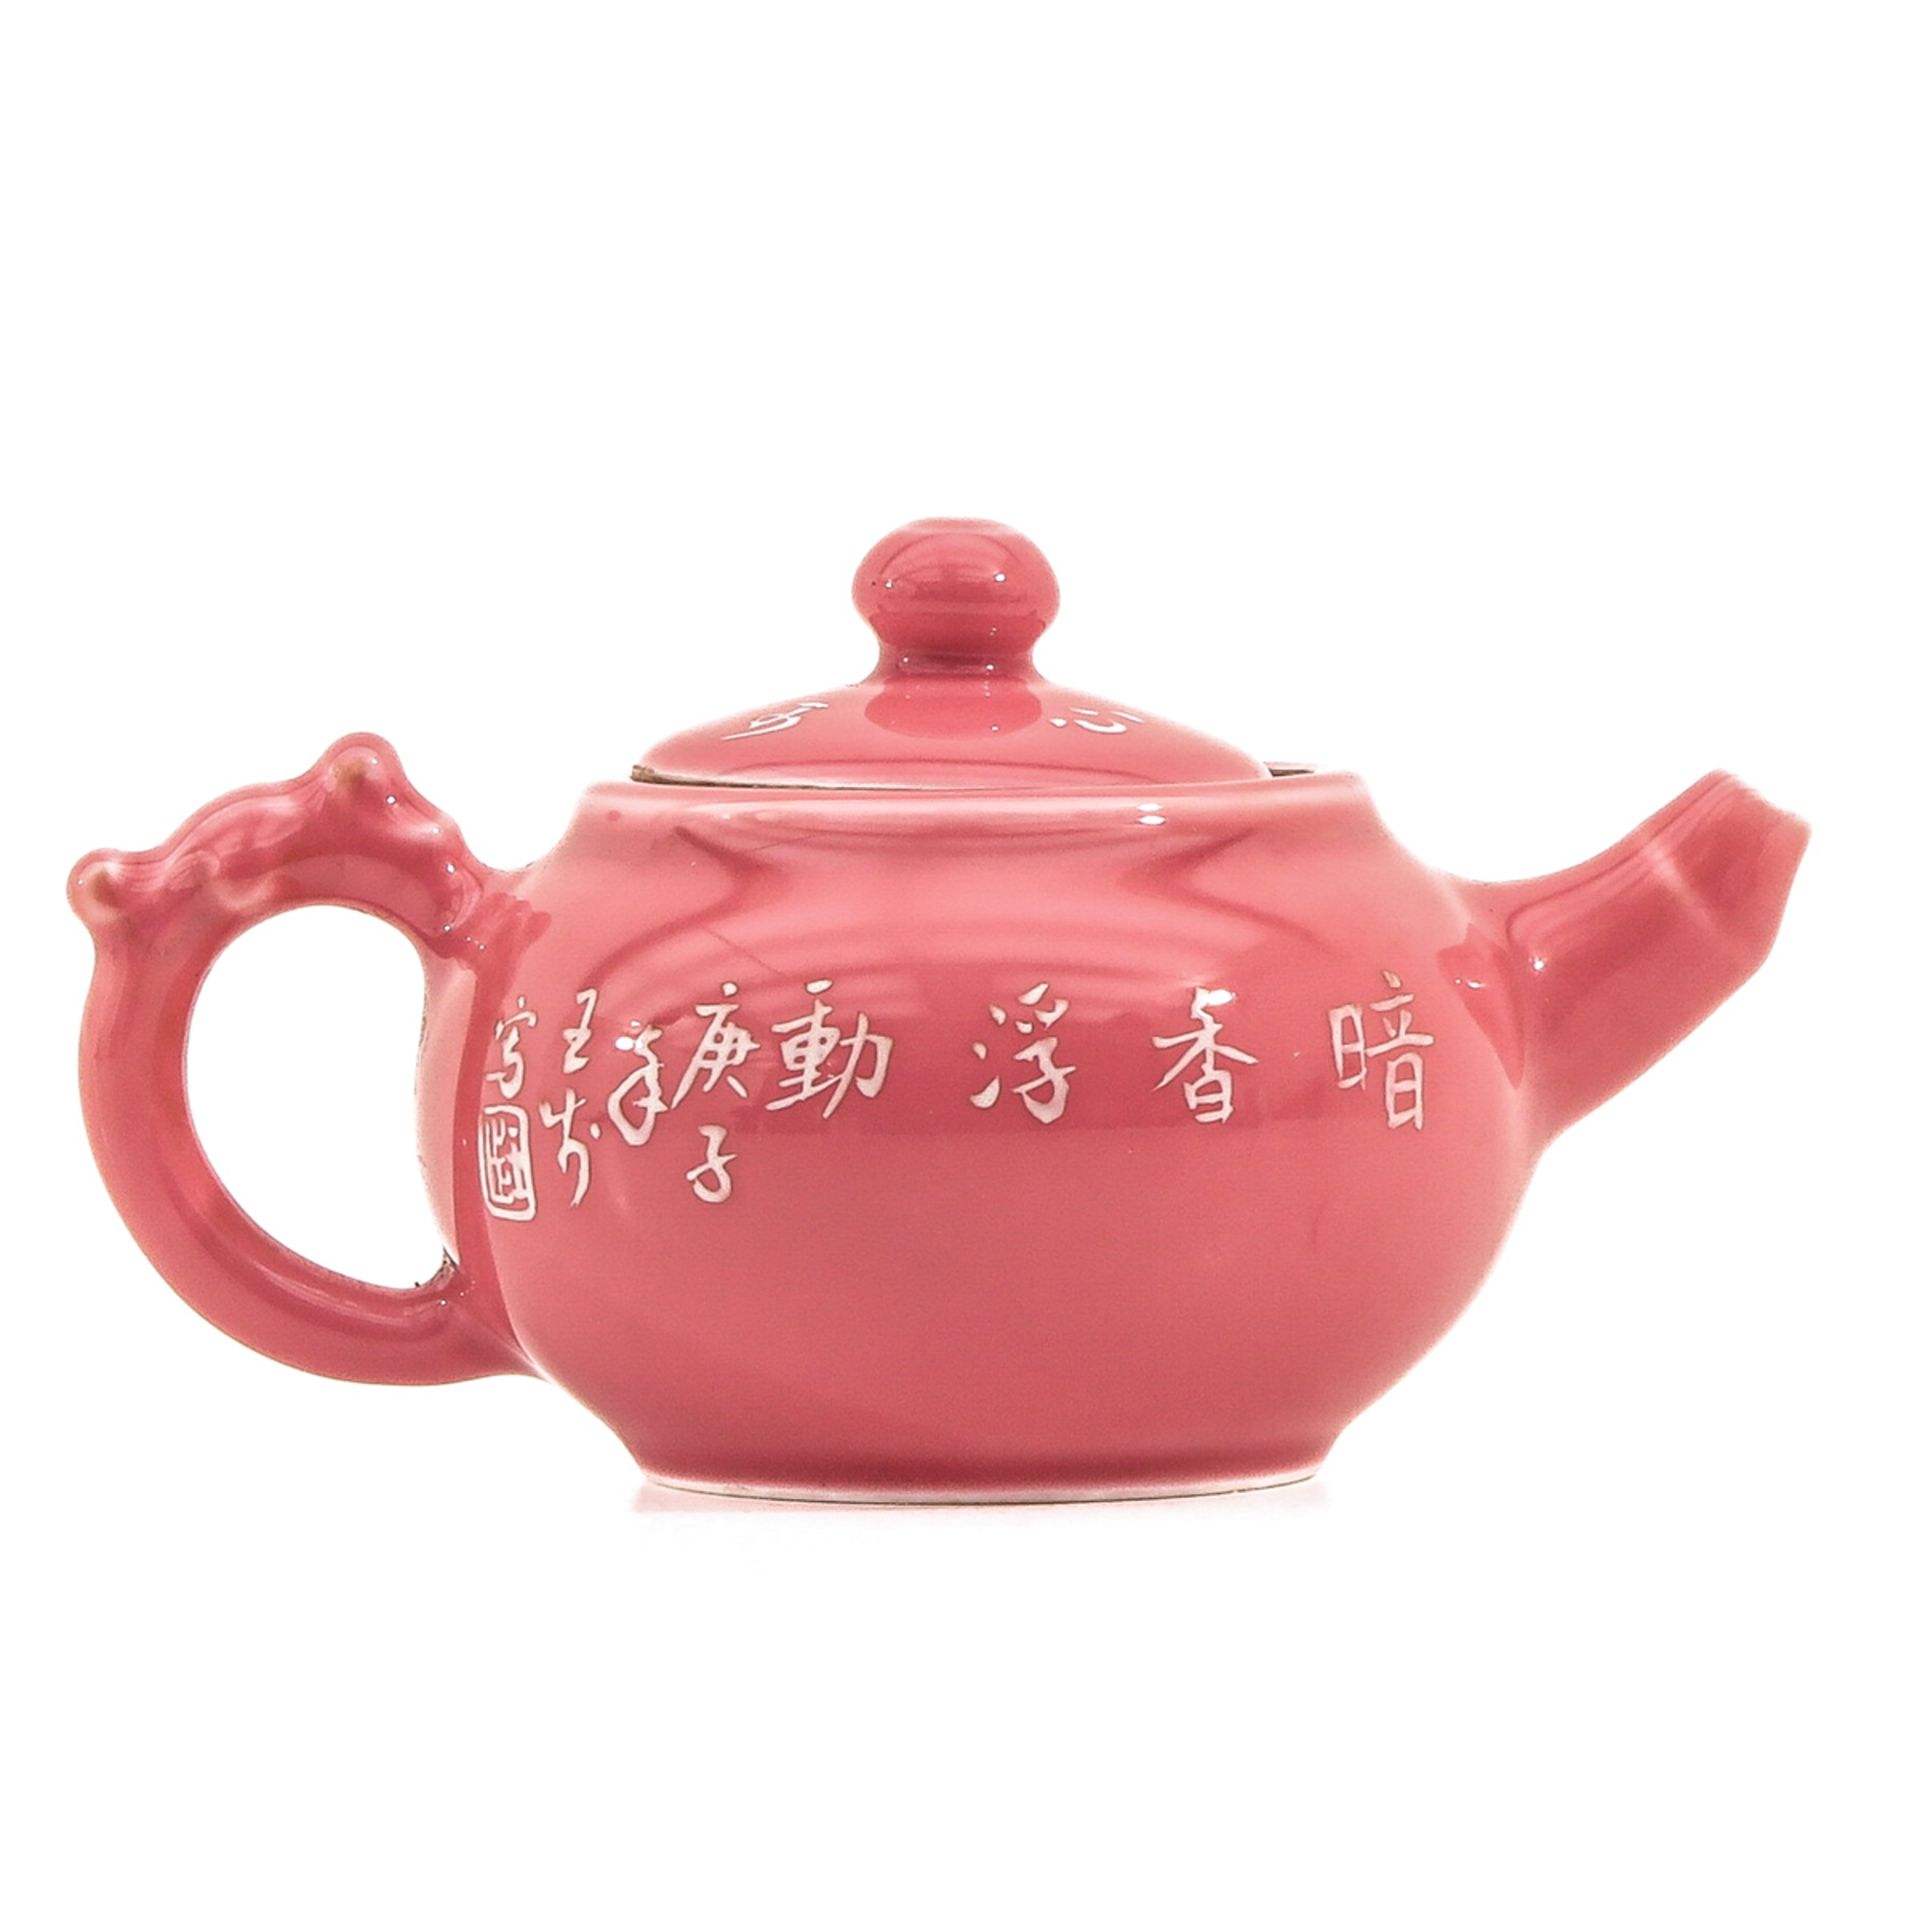 A Pink Glaze Teapot - Image 3 of 10